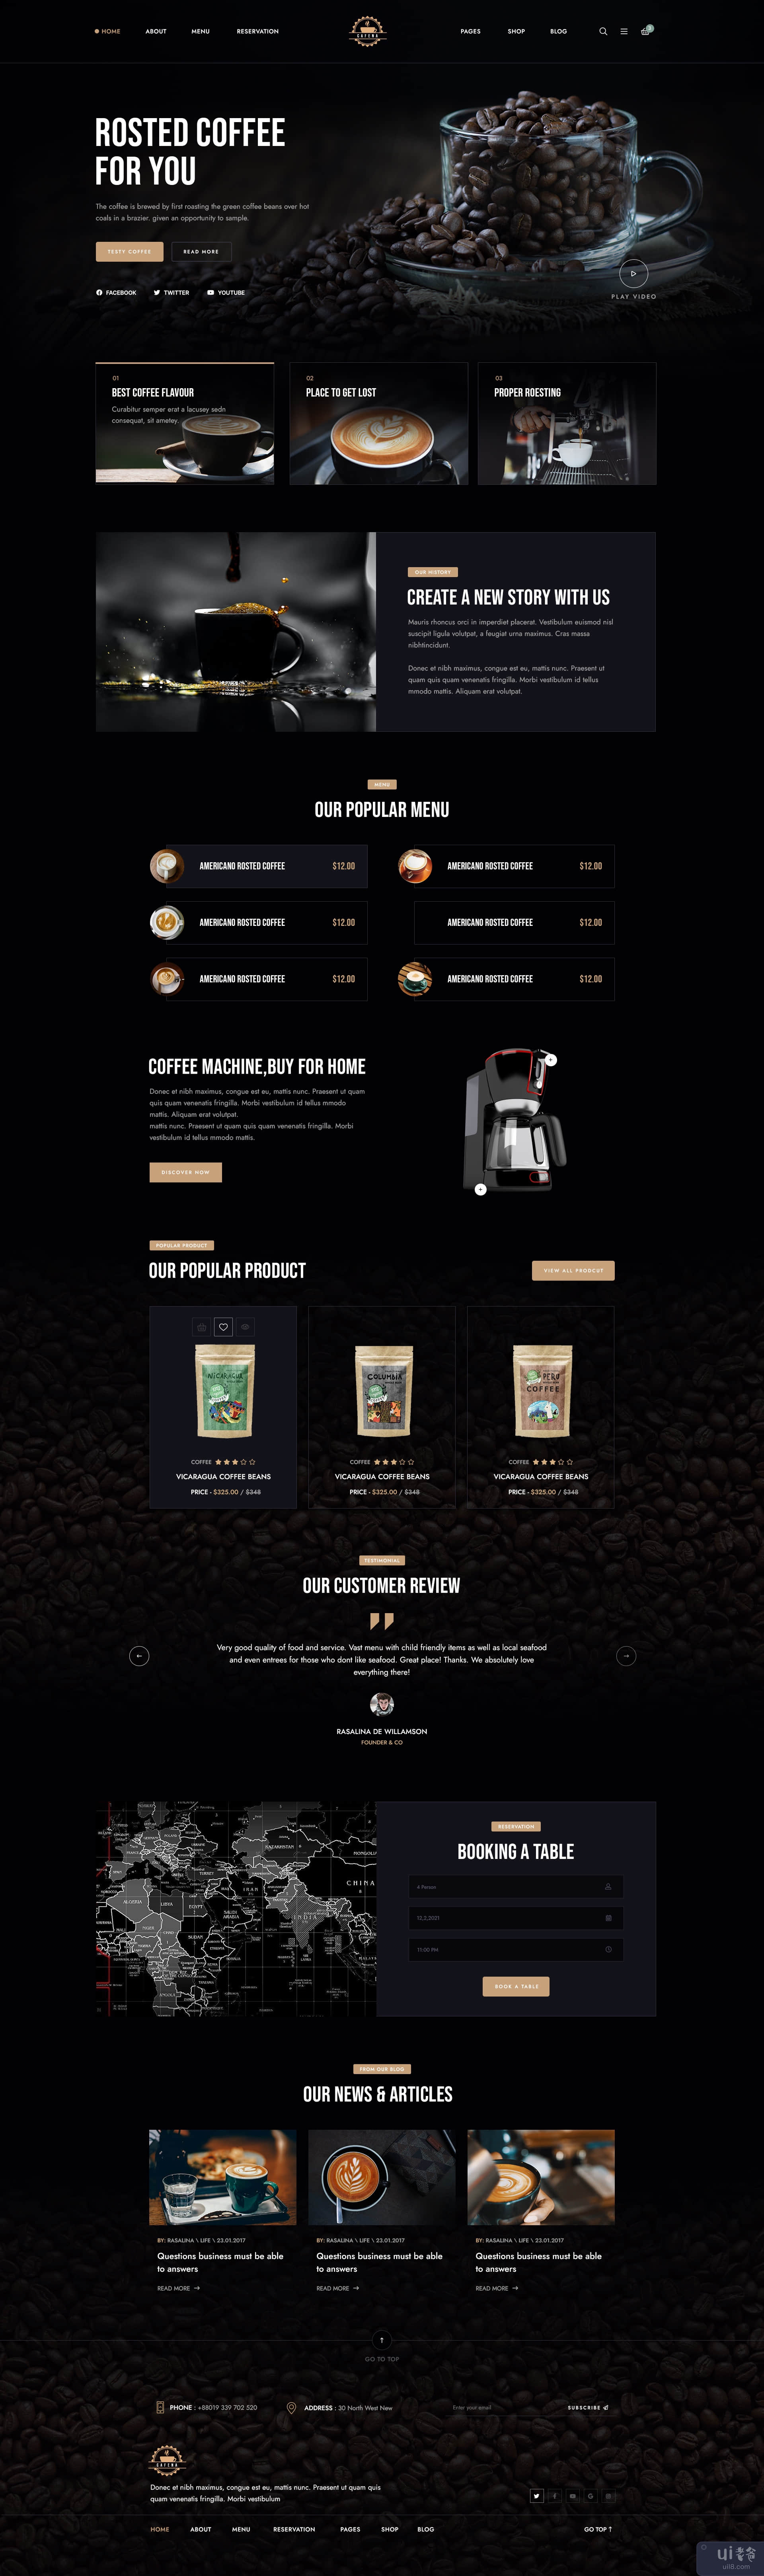 Cafena_Coffee 店 PSD 模板(Cafena_Coffee Shop PSD Template)插图